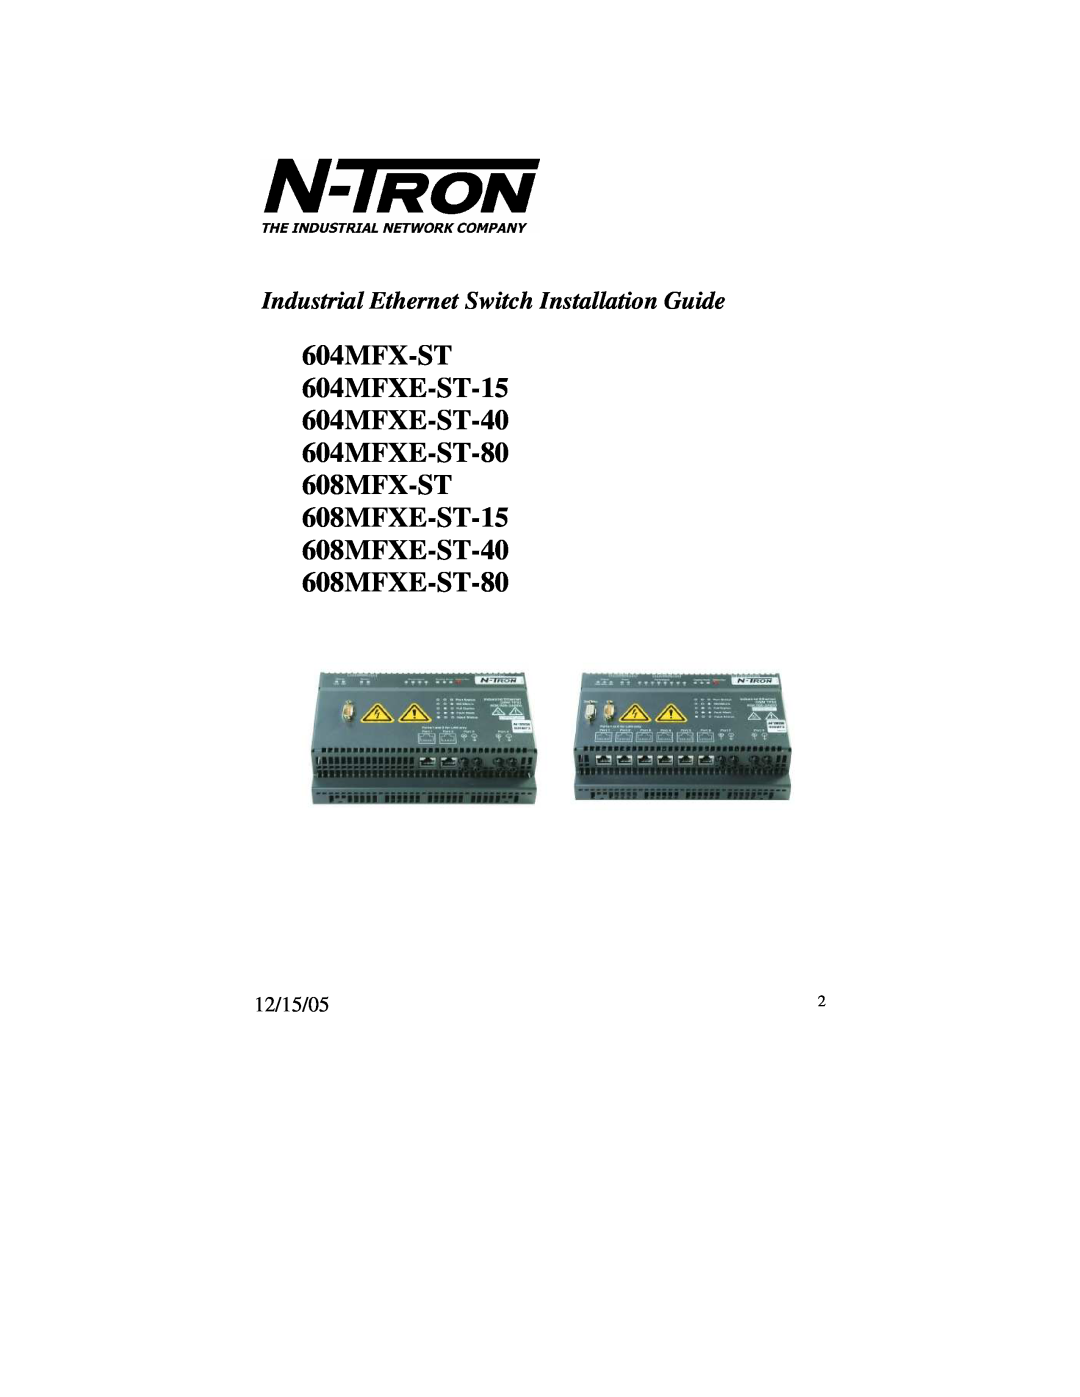 N-Tron 608MFXE-ST-40, 608MFX-ST, 604MFX-ST, 608MFXE-ST-80 manual Industrial Ethernet Switch Installation Guide, 12/15/05 